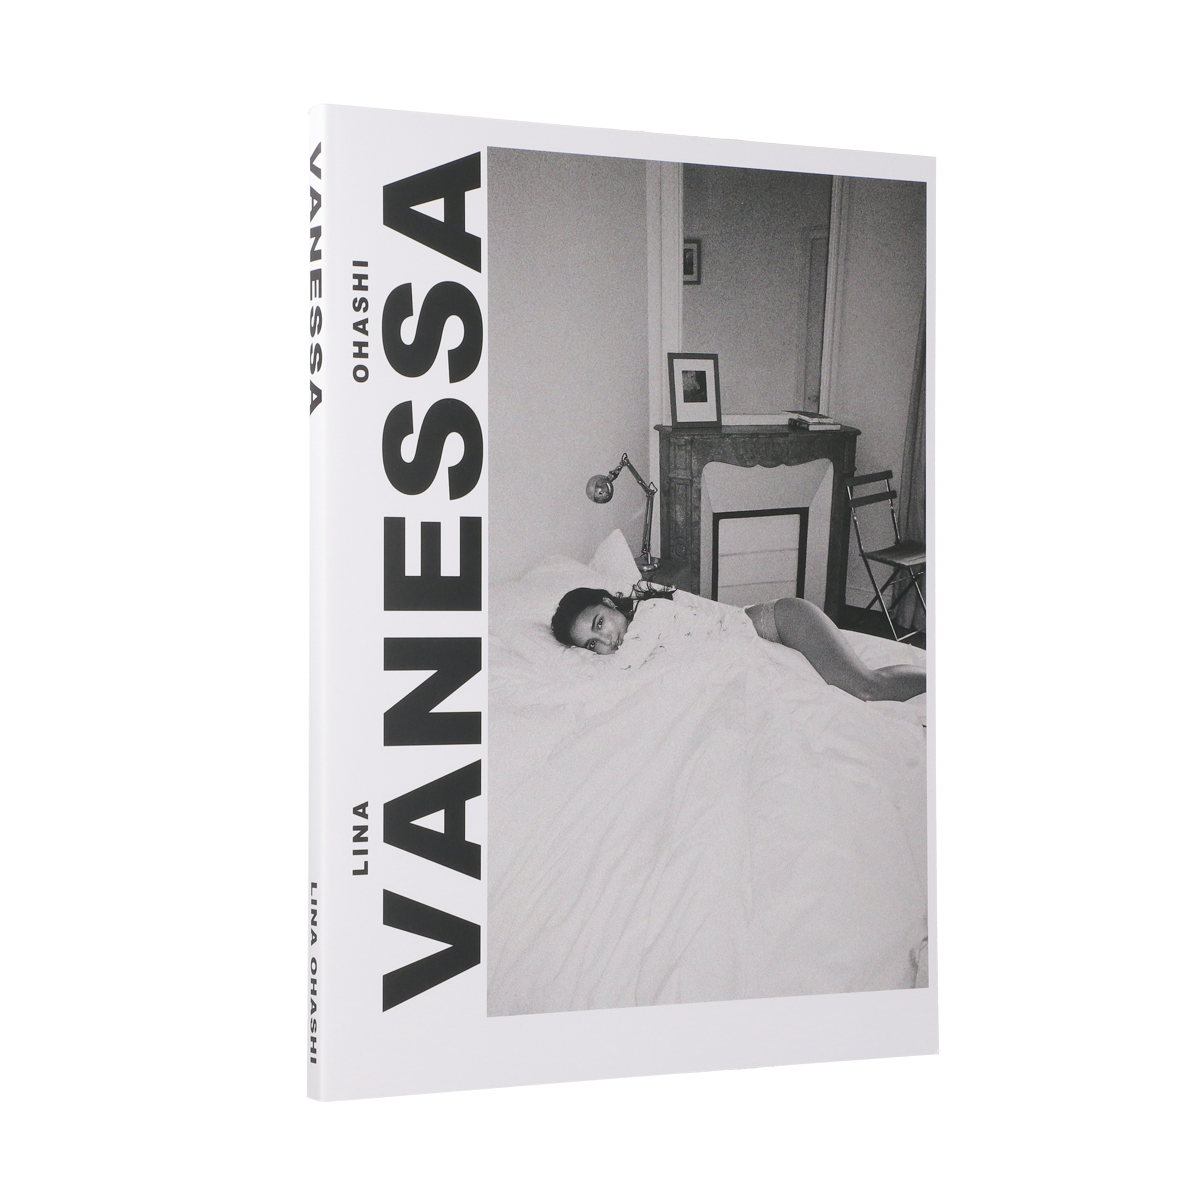 IOが撮影を手掛けた大橋リナの写真集「VANESSA」が本日より再販開始 